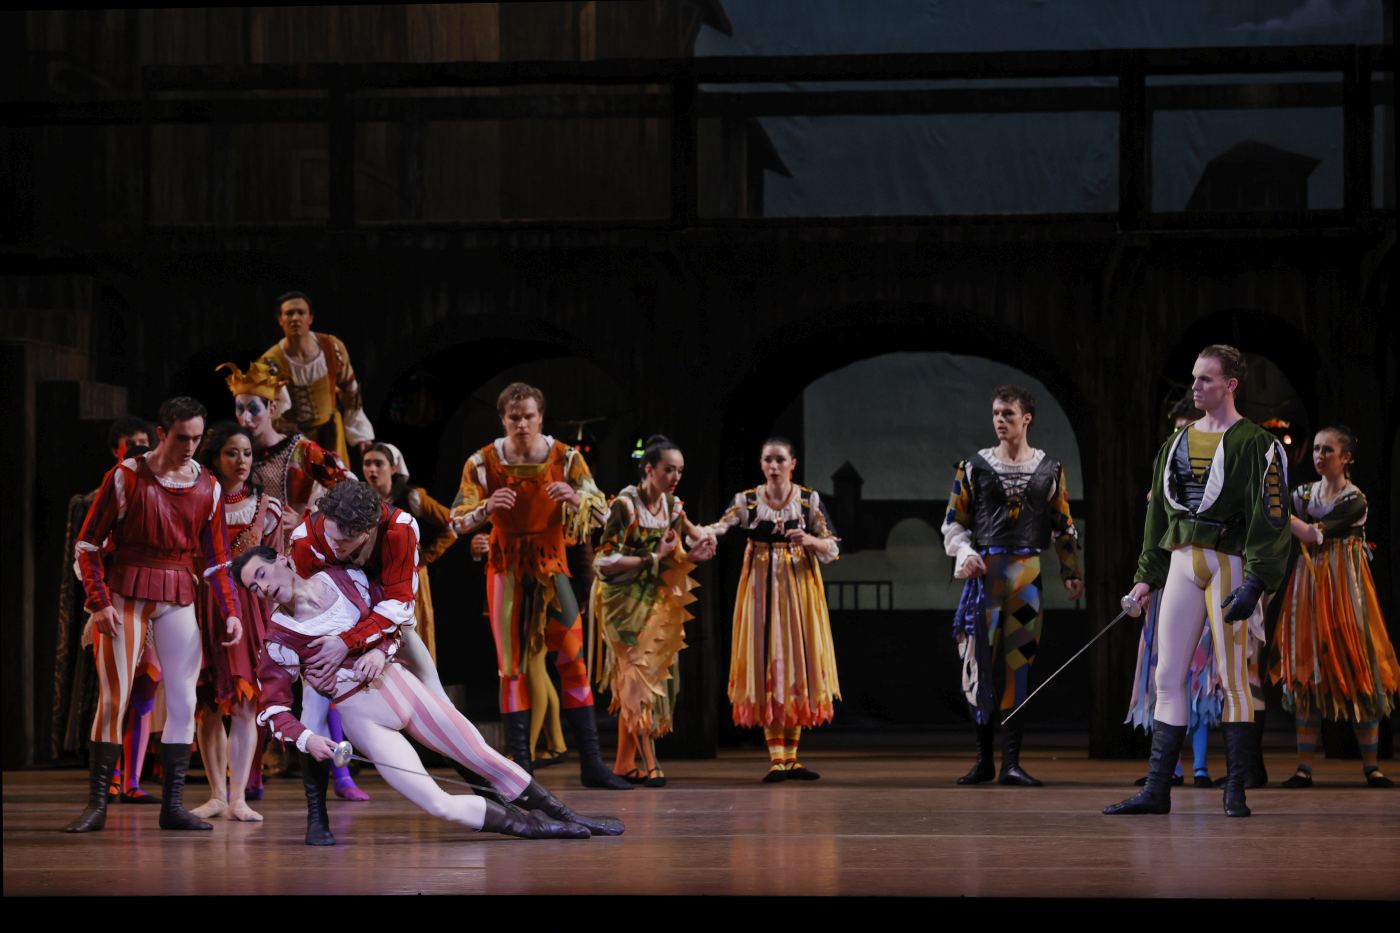 7. C.Holmes (Benvolio), C.Linnane (Romeo), B.Chynoweth (Mercutio), A.Bull (Tybalt), and ensemble, “Romeo and Juliet” by J.Cranko, The Australian Ballet 2022 © J.Busby